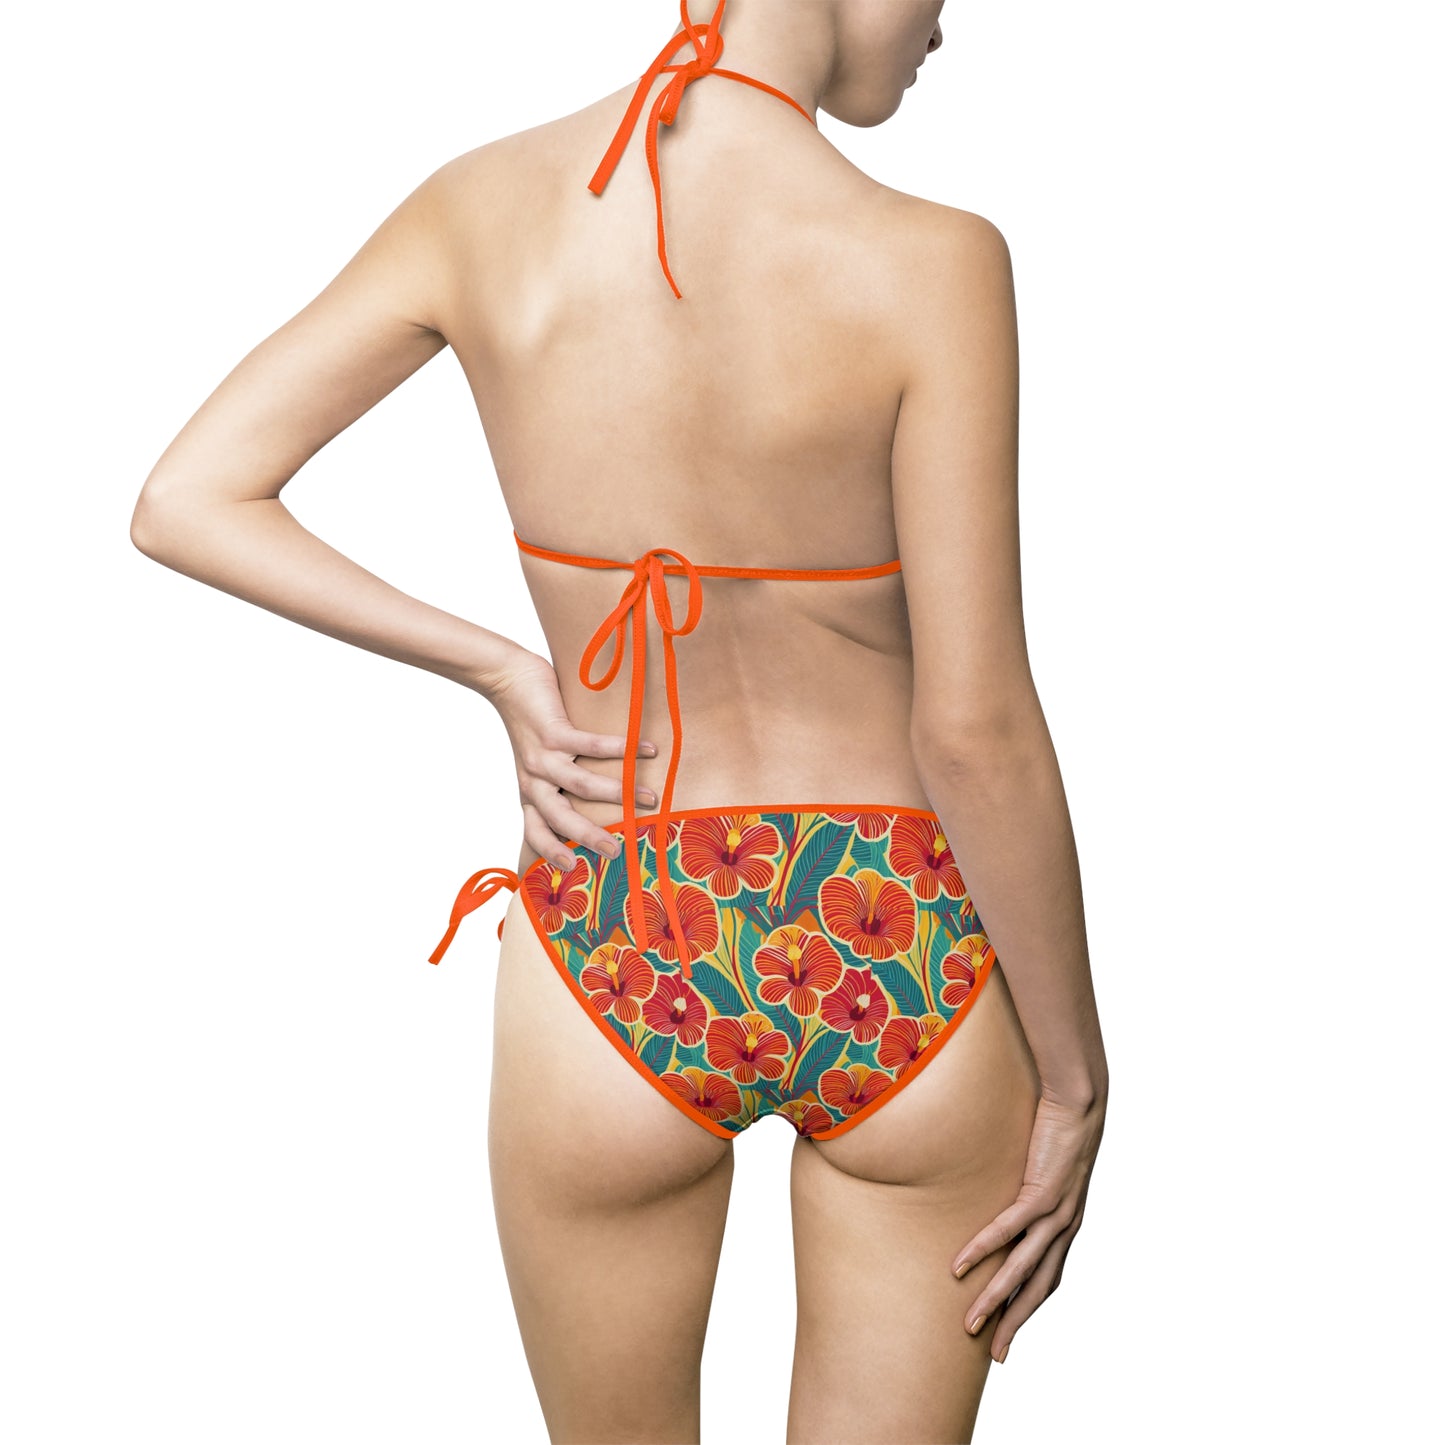 Hibiscus1 - Women's Bikini Swimsuit